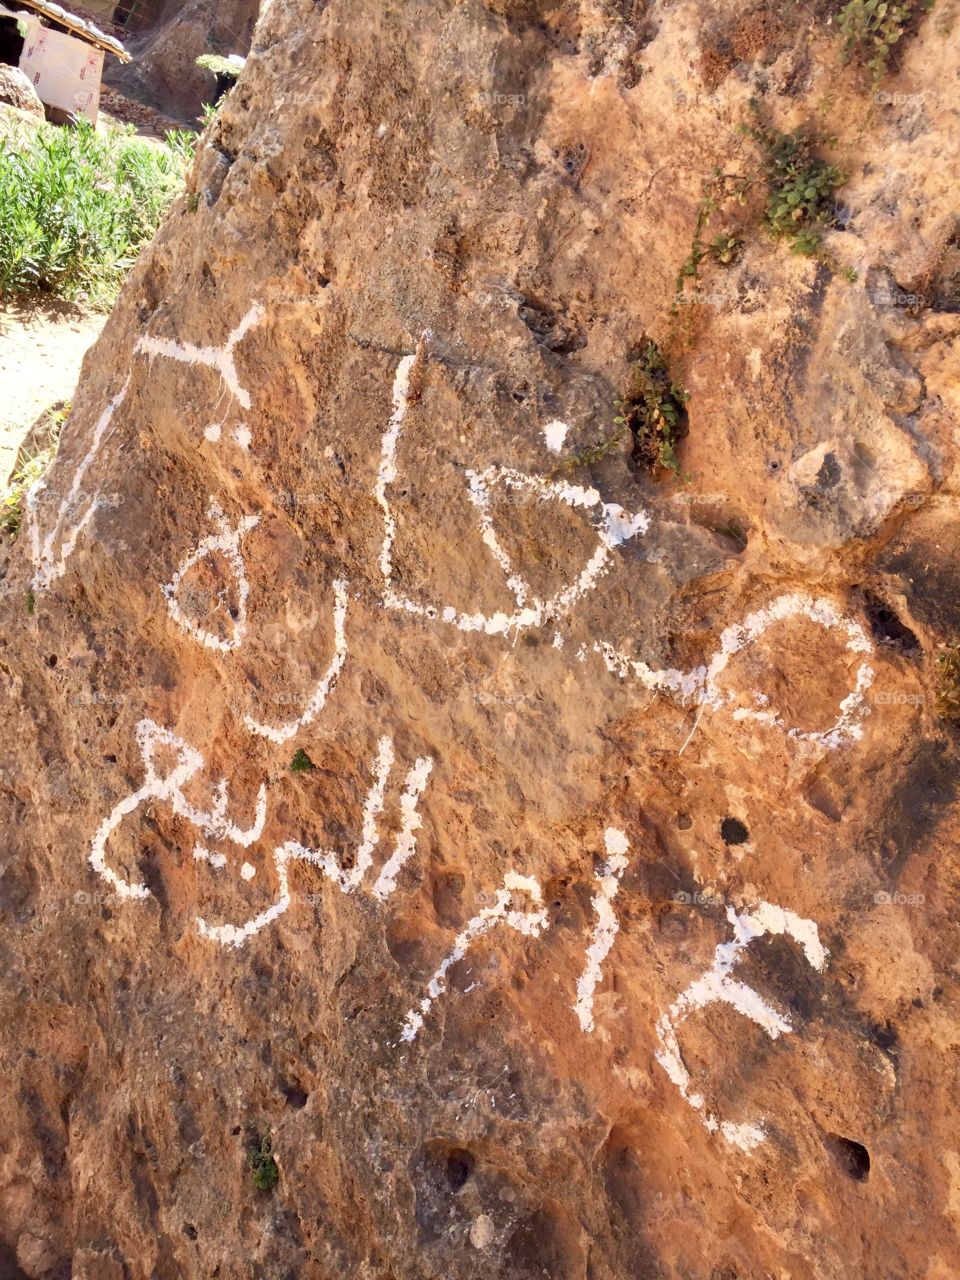 Writing on the rocks, The source of the Umm Al-Rabee River, khenifra, Morocco 